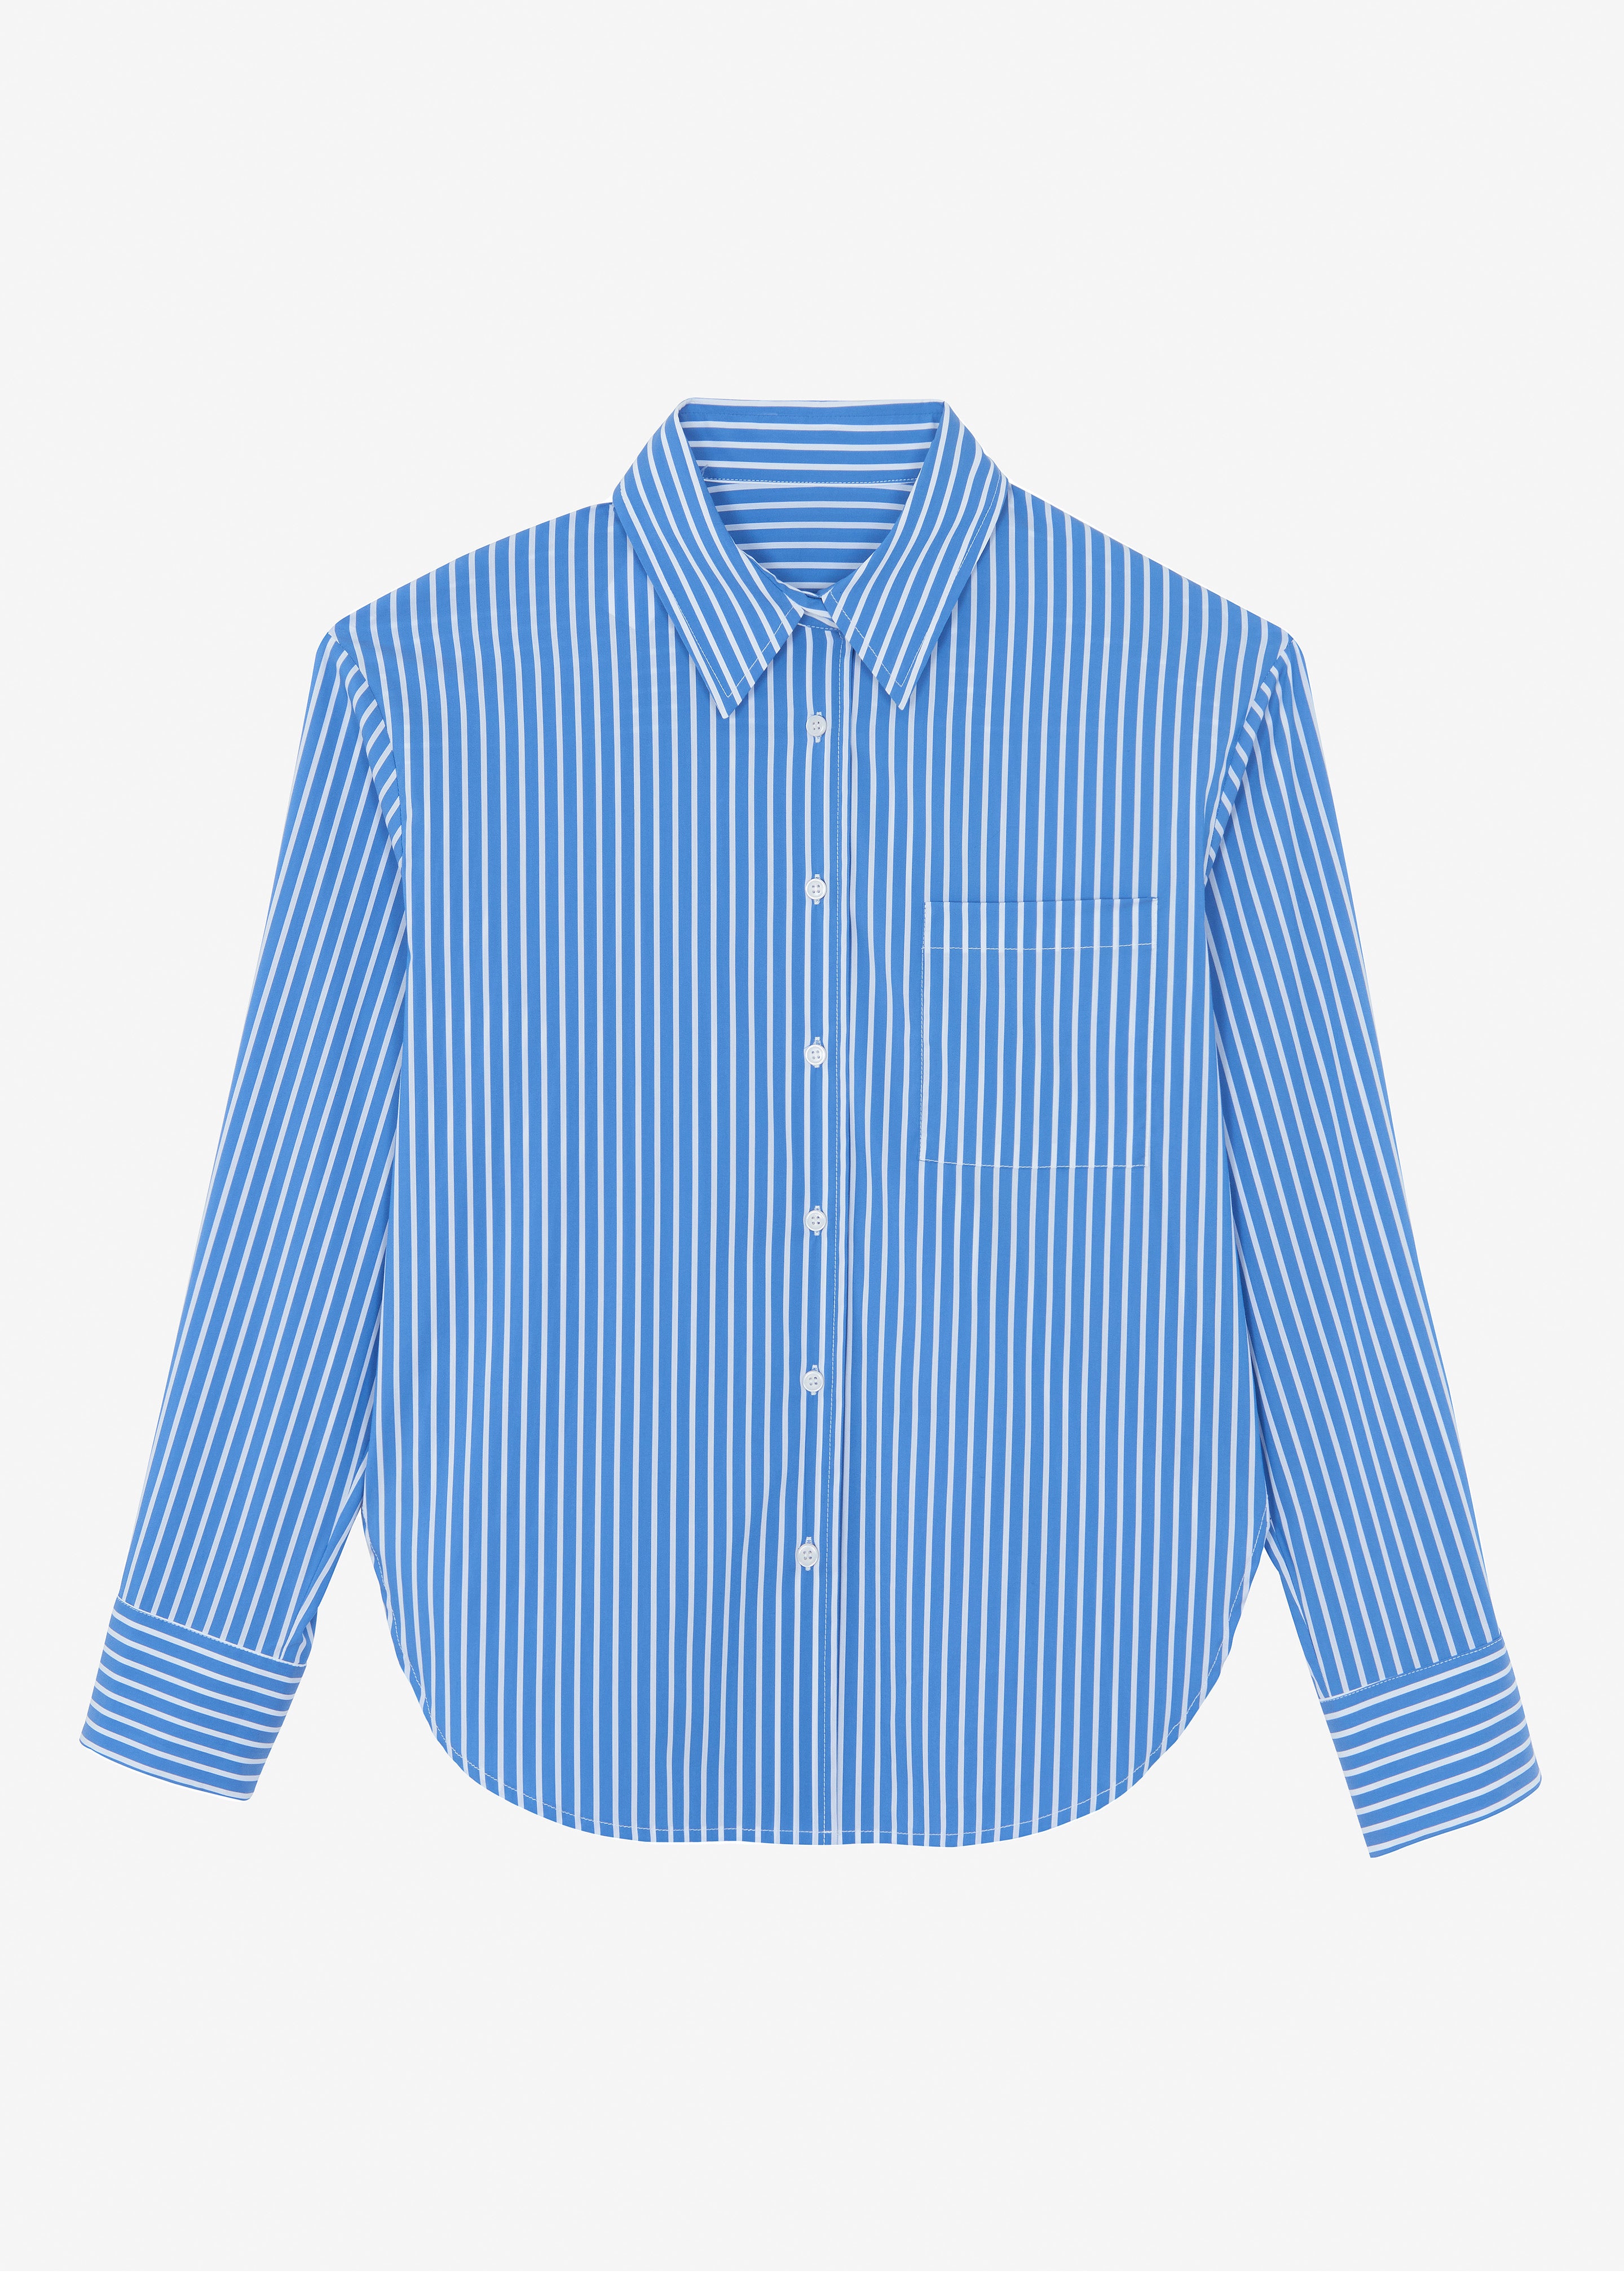 Lui Thin Stripe Shirt - Medium Blue Stripe - 10